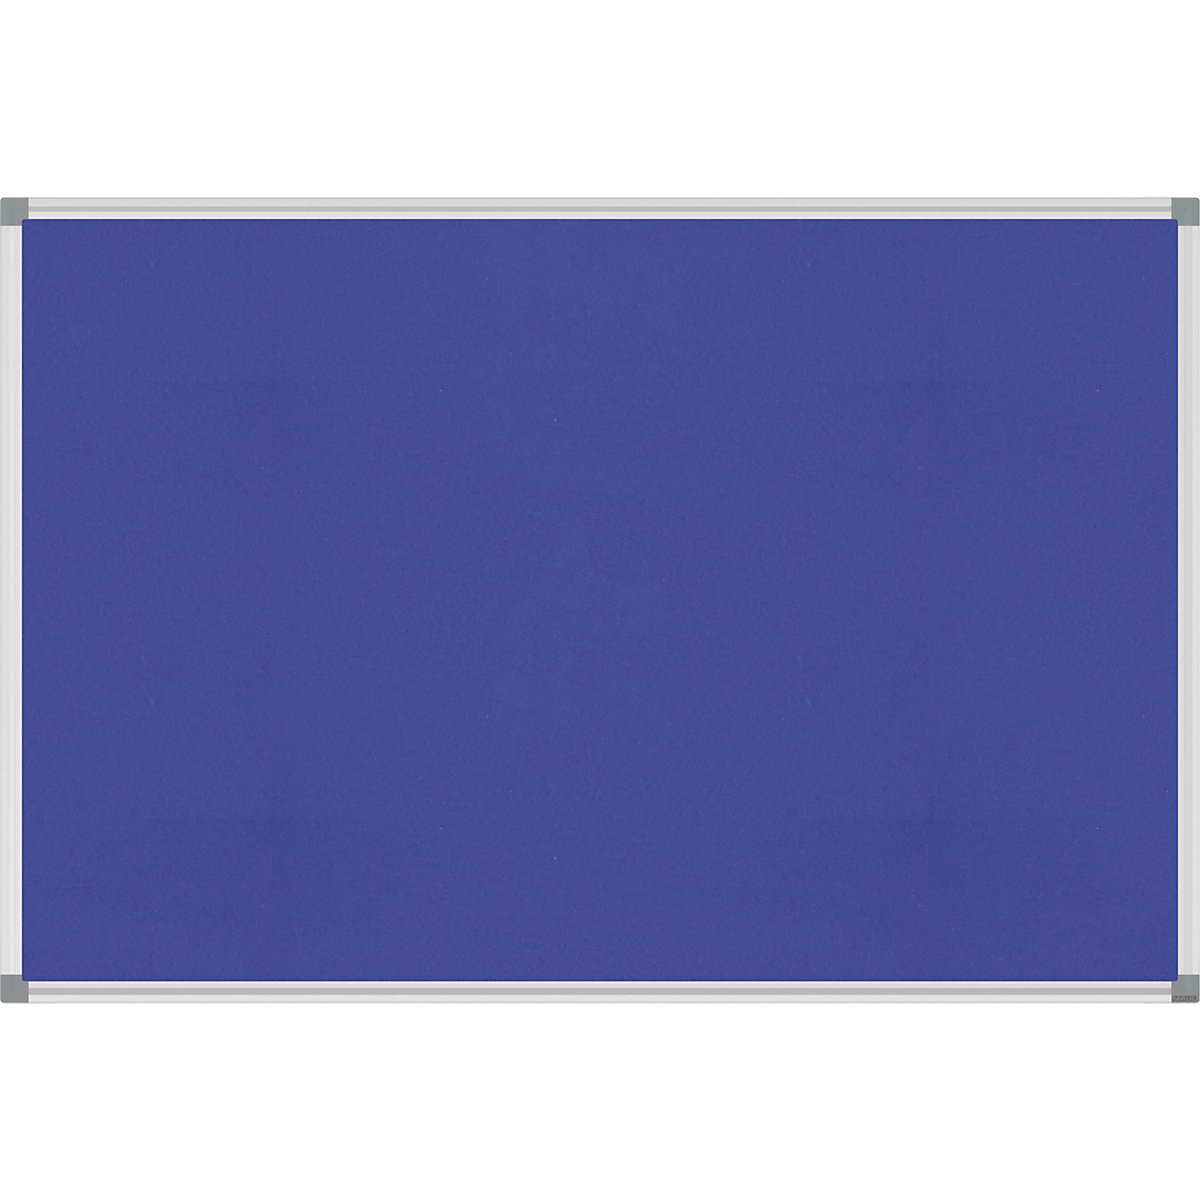 Lavagna a spilli STANDARD – MAUL, rivestimento in feltro, blu, largh. x alt. 900 x 600 mm-4